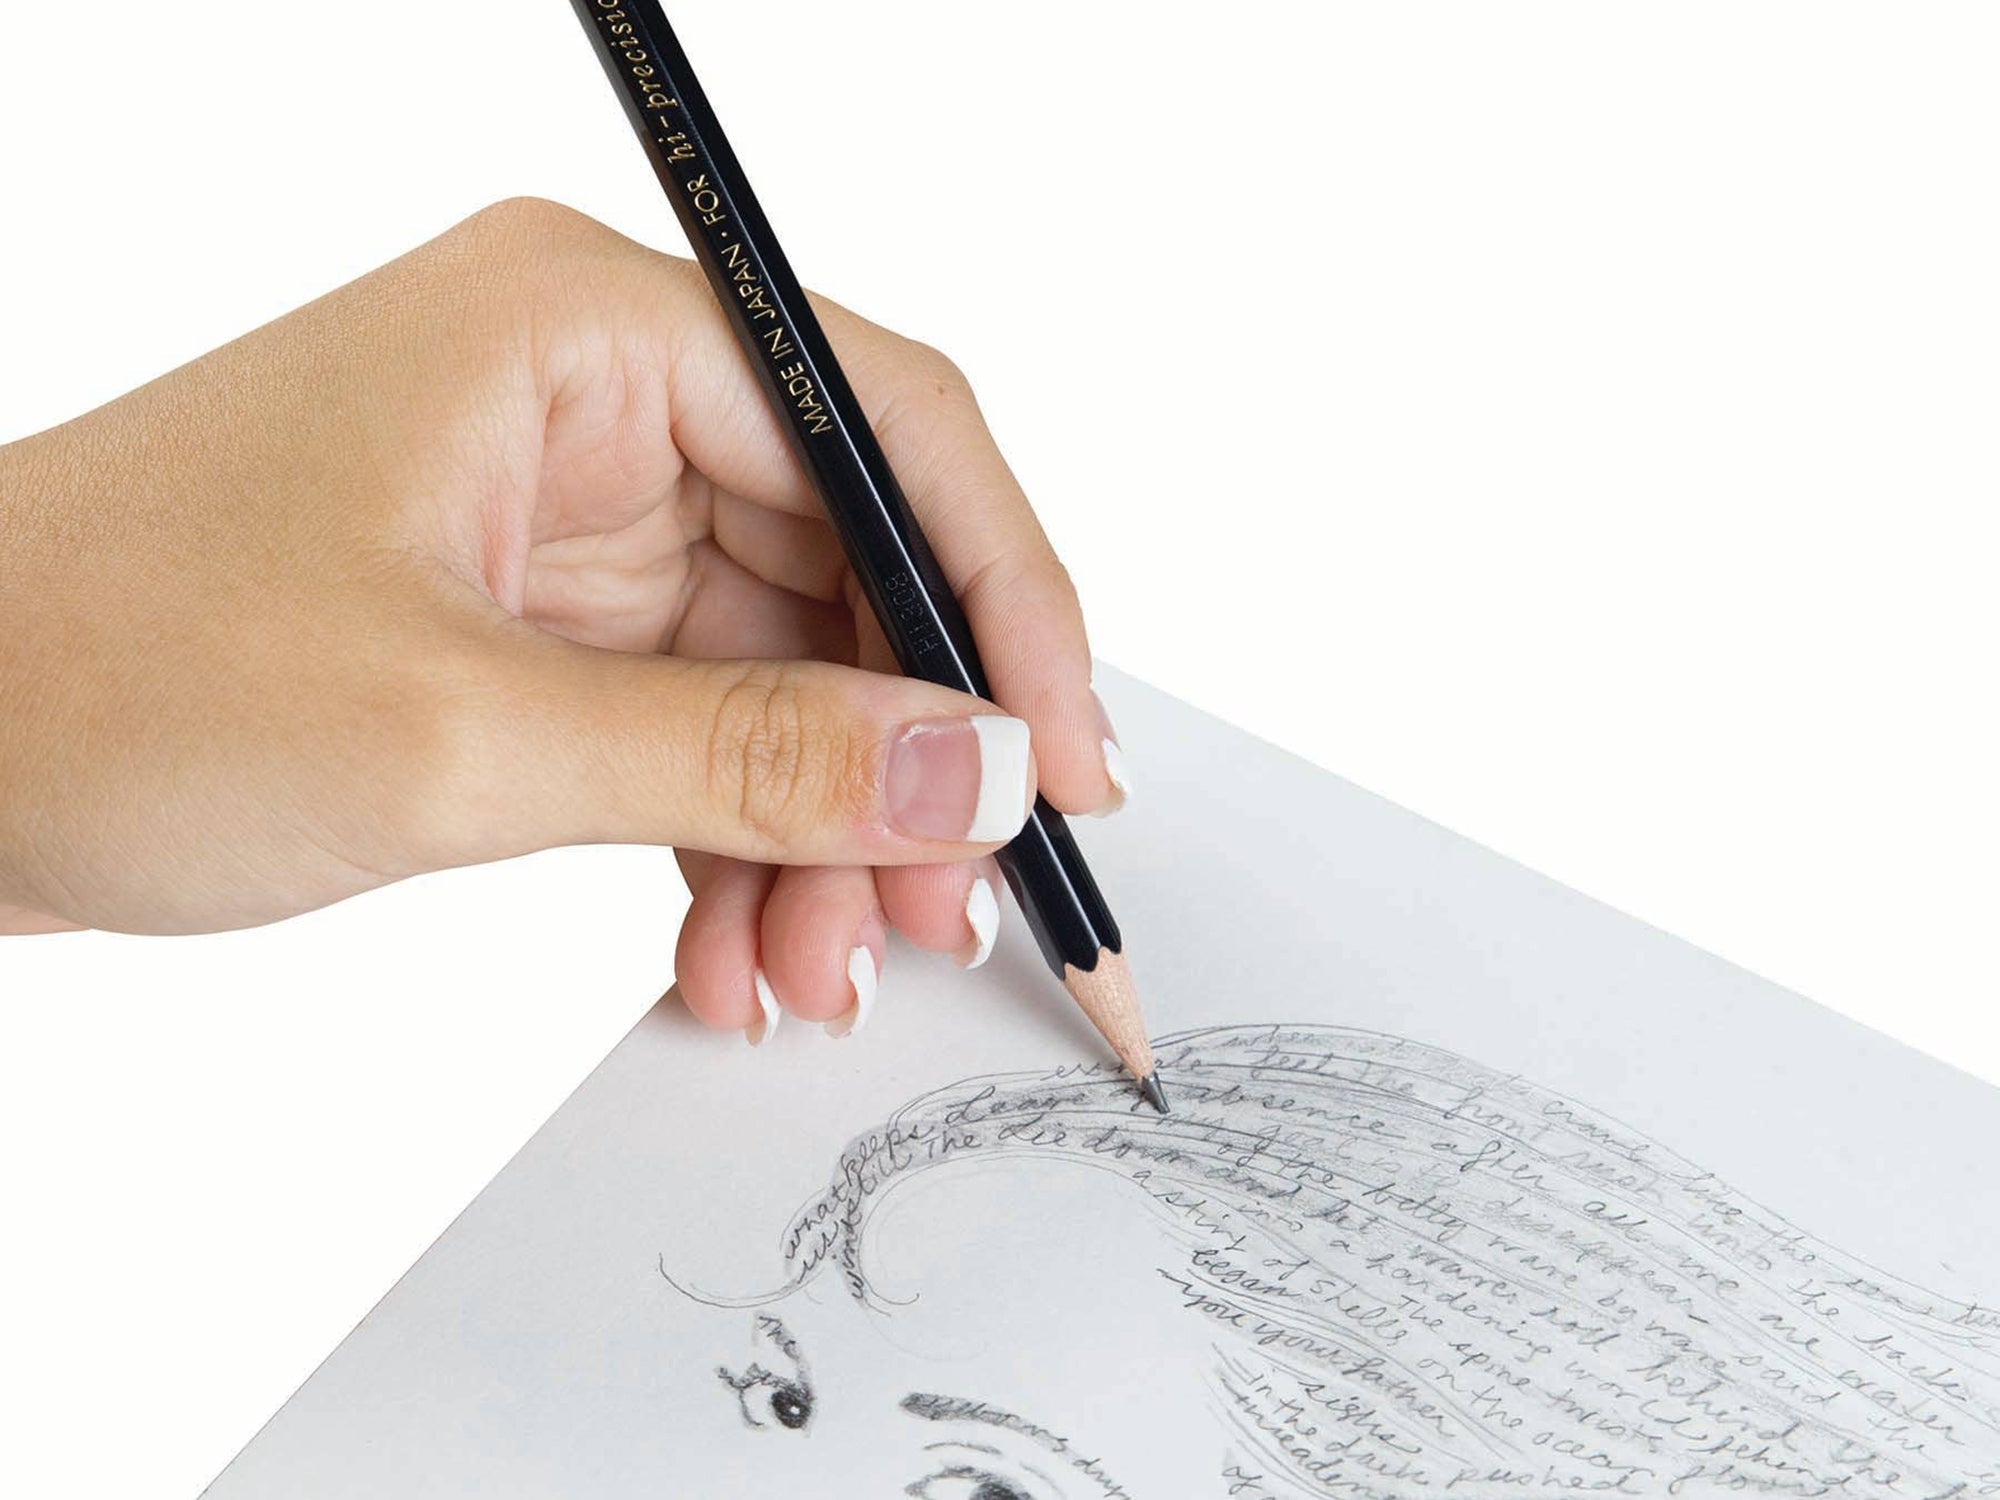 MONO Drawing Pencil Set